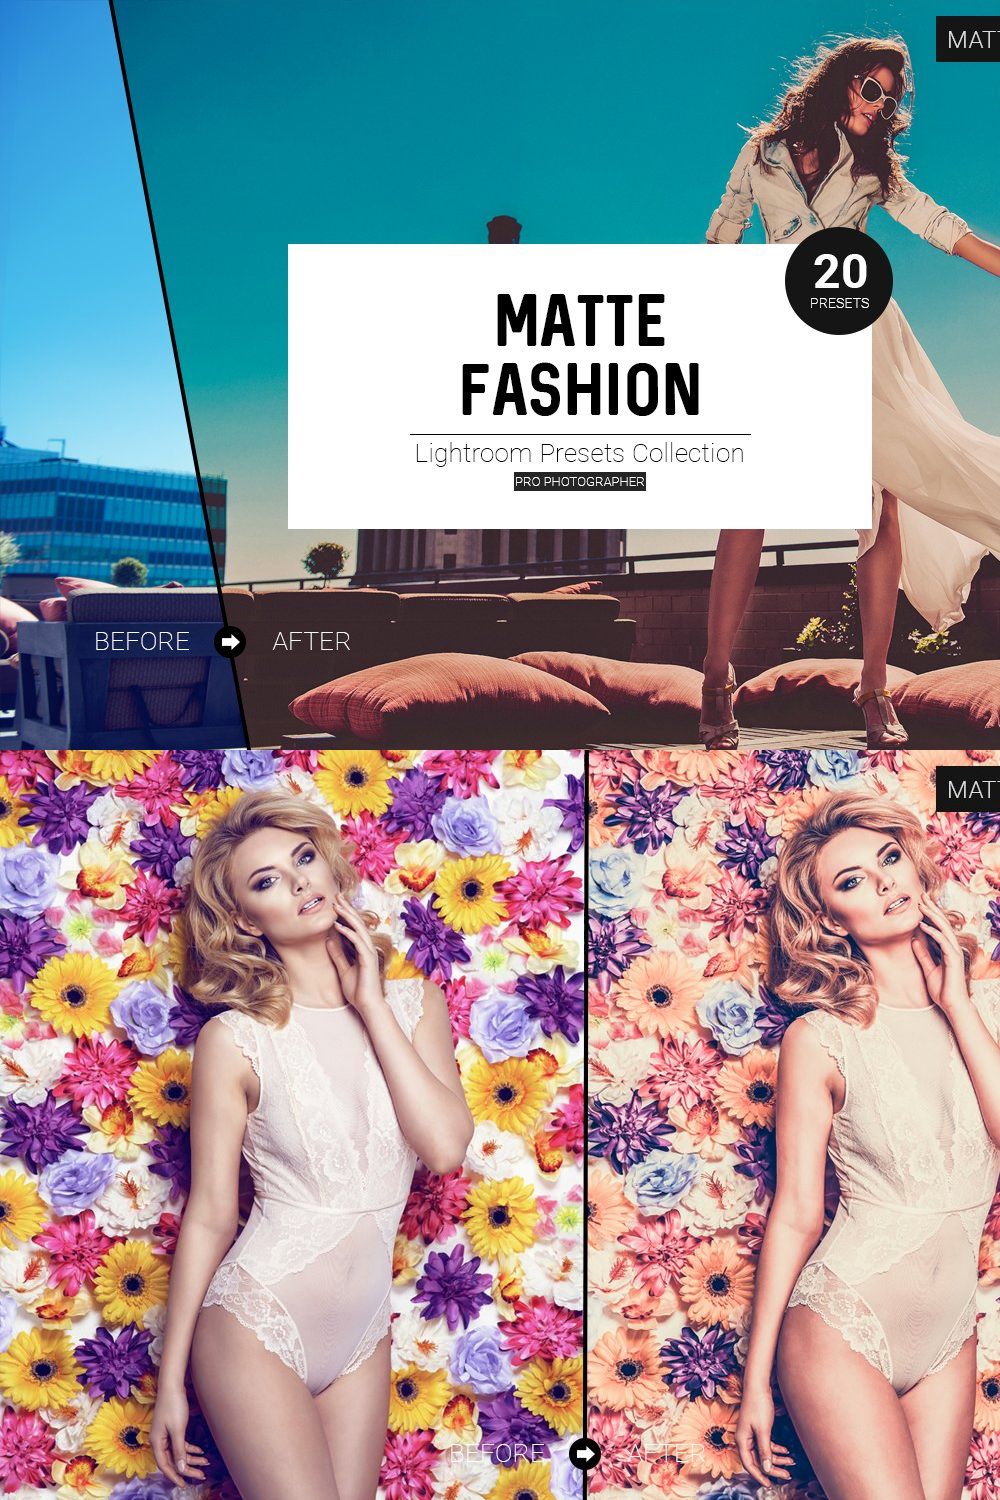 Matte Fashion Lightroom Presets pinterest preview image.